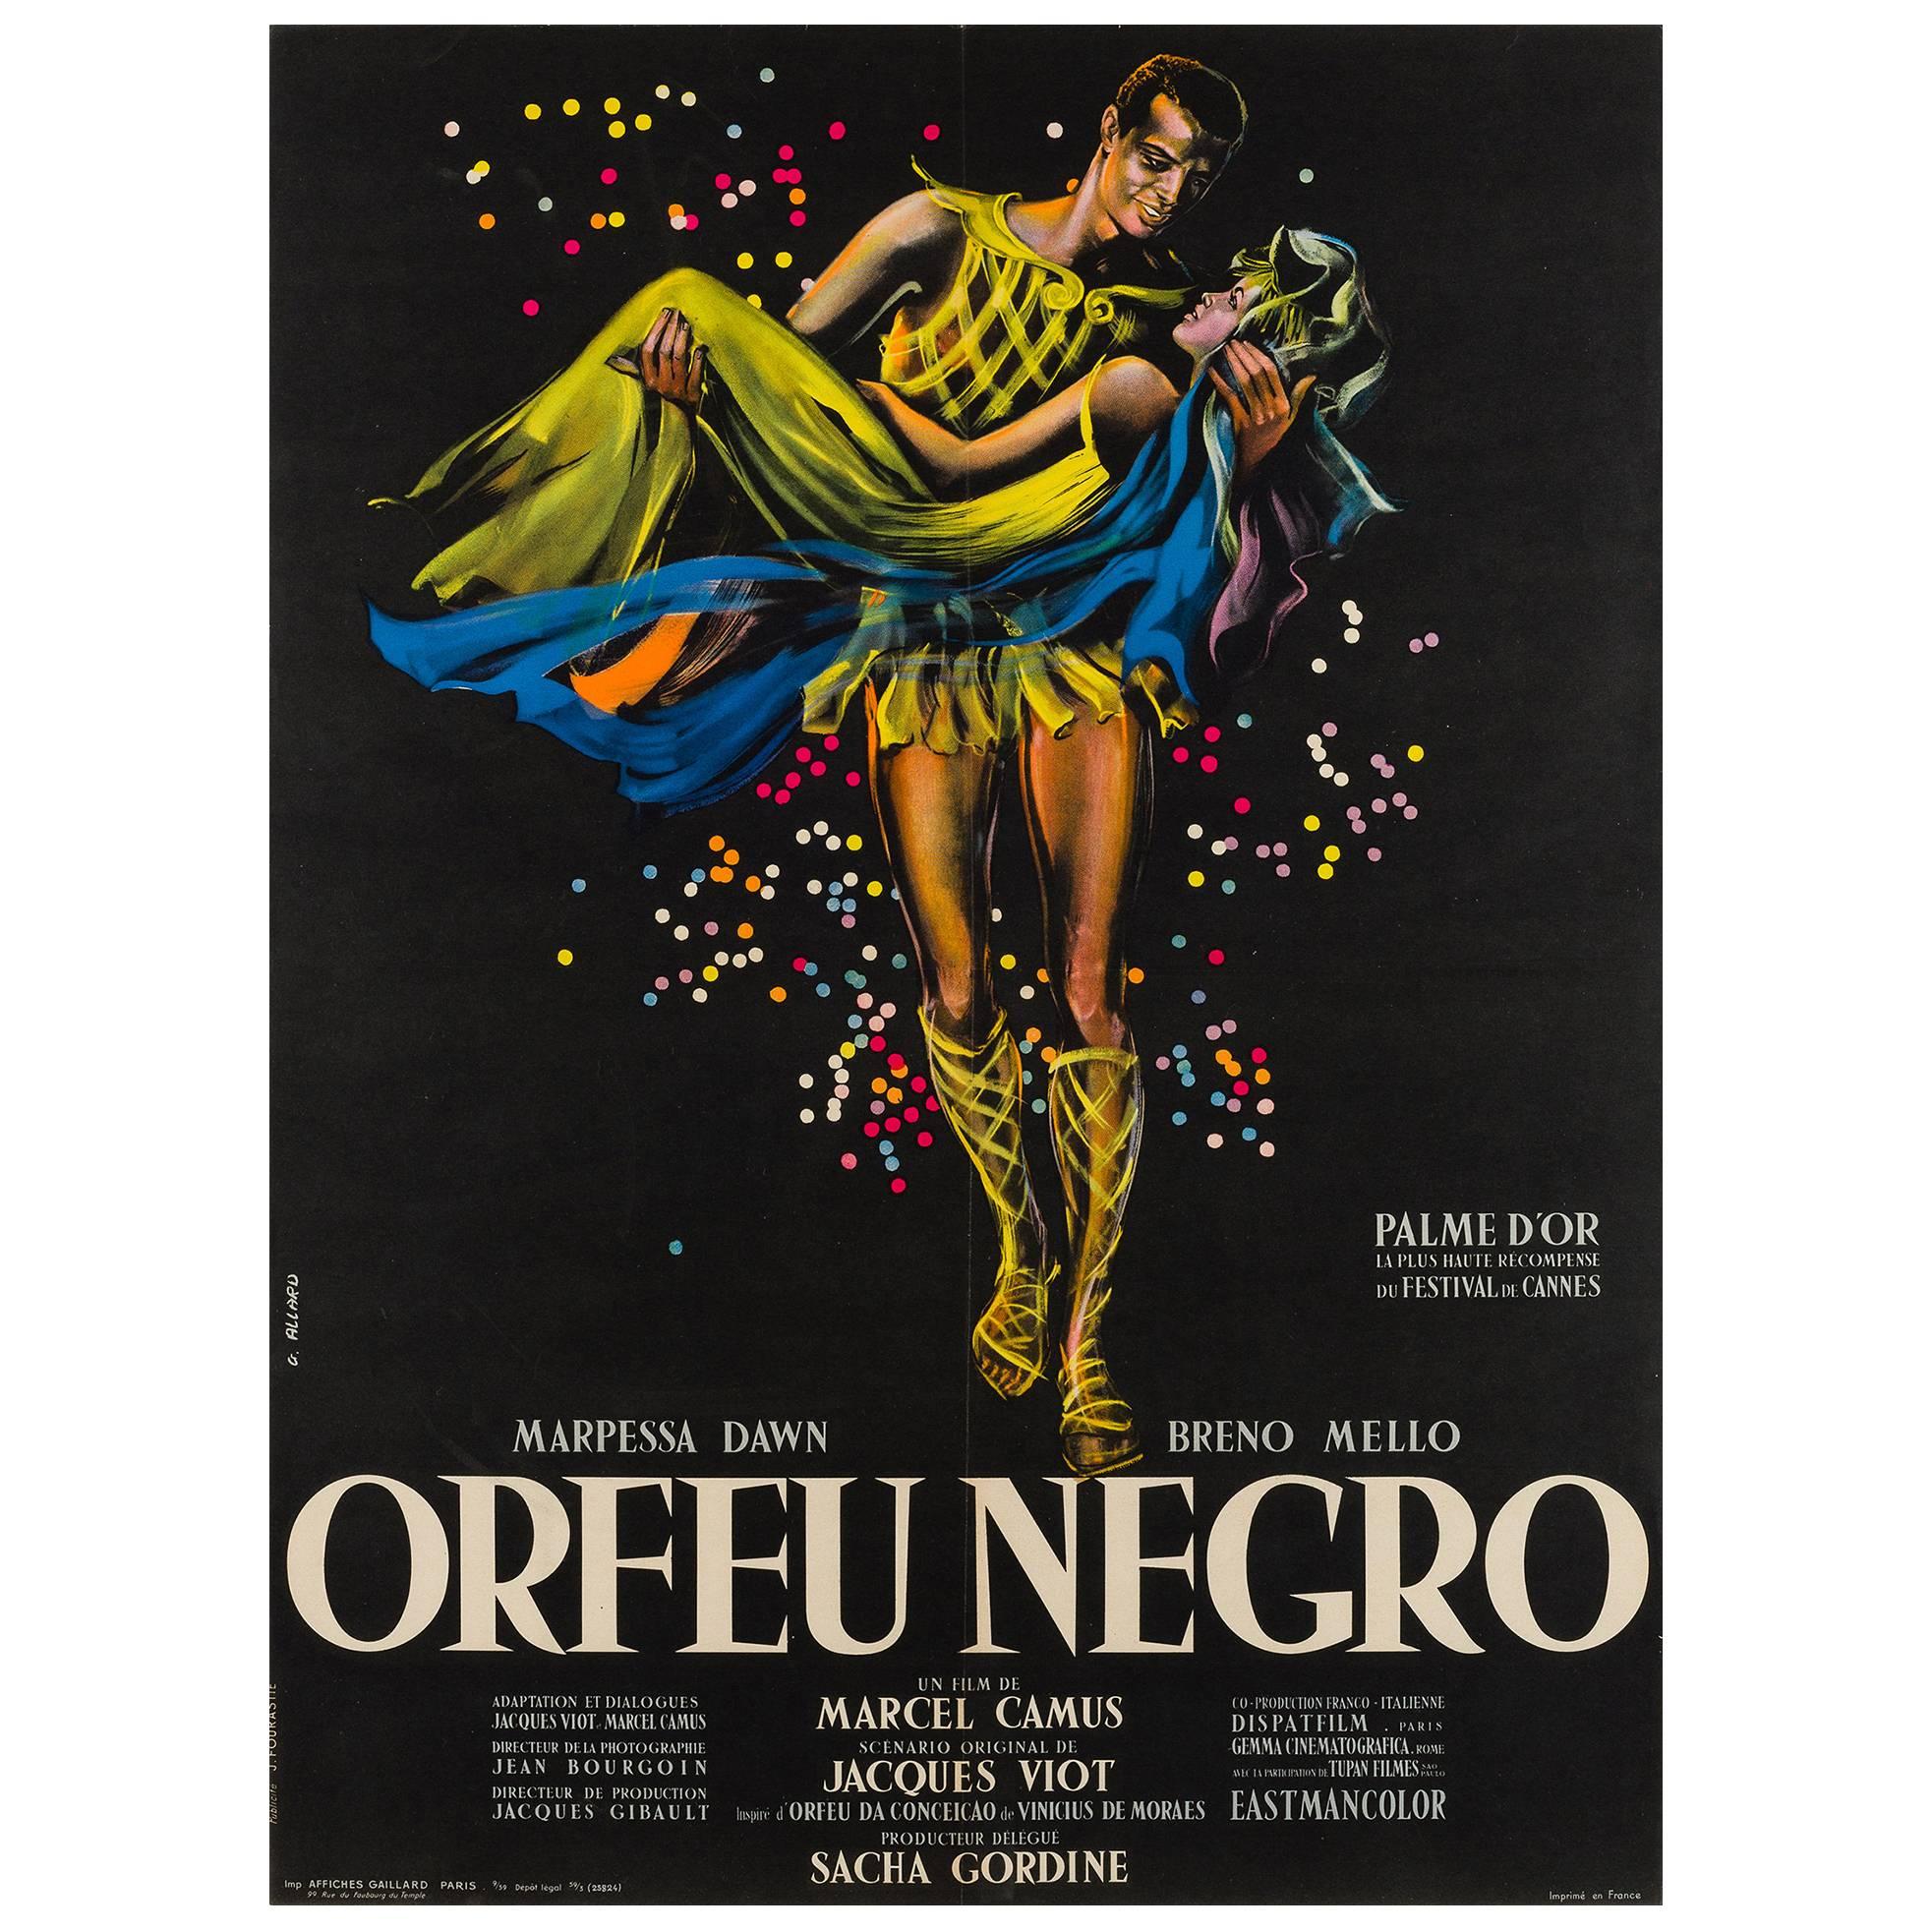 Black Orpheus Original French Film Poster, Georges Allard, 1959